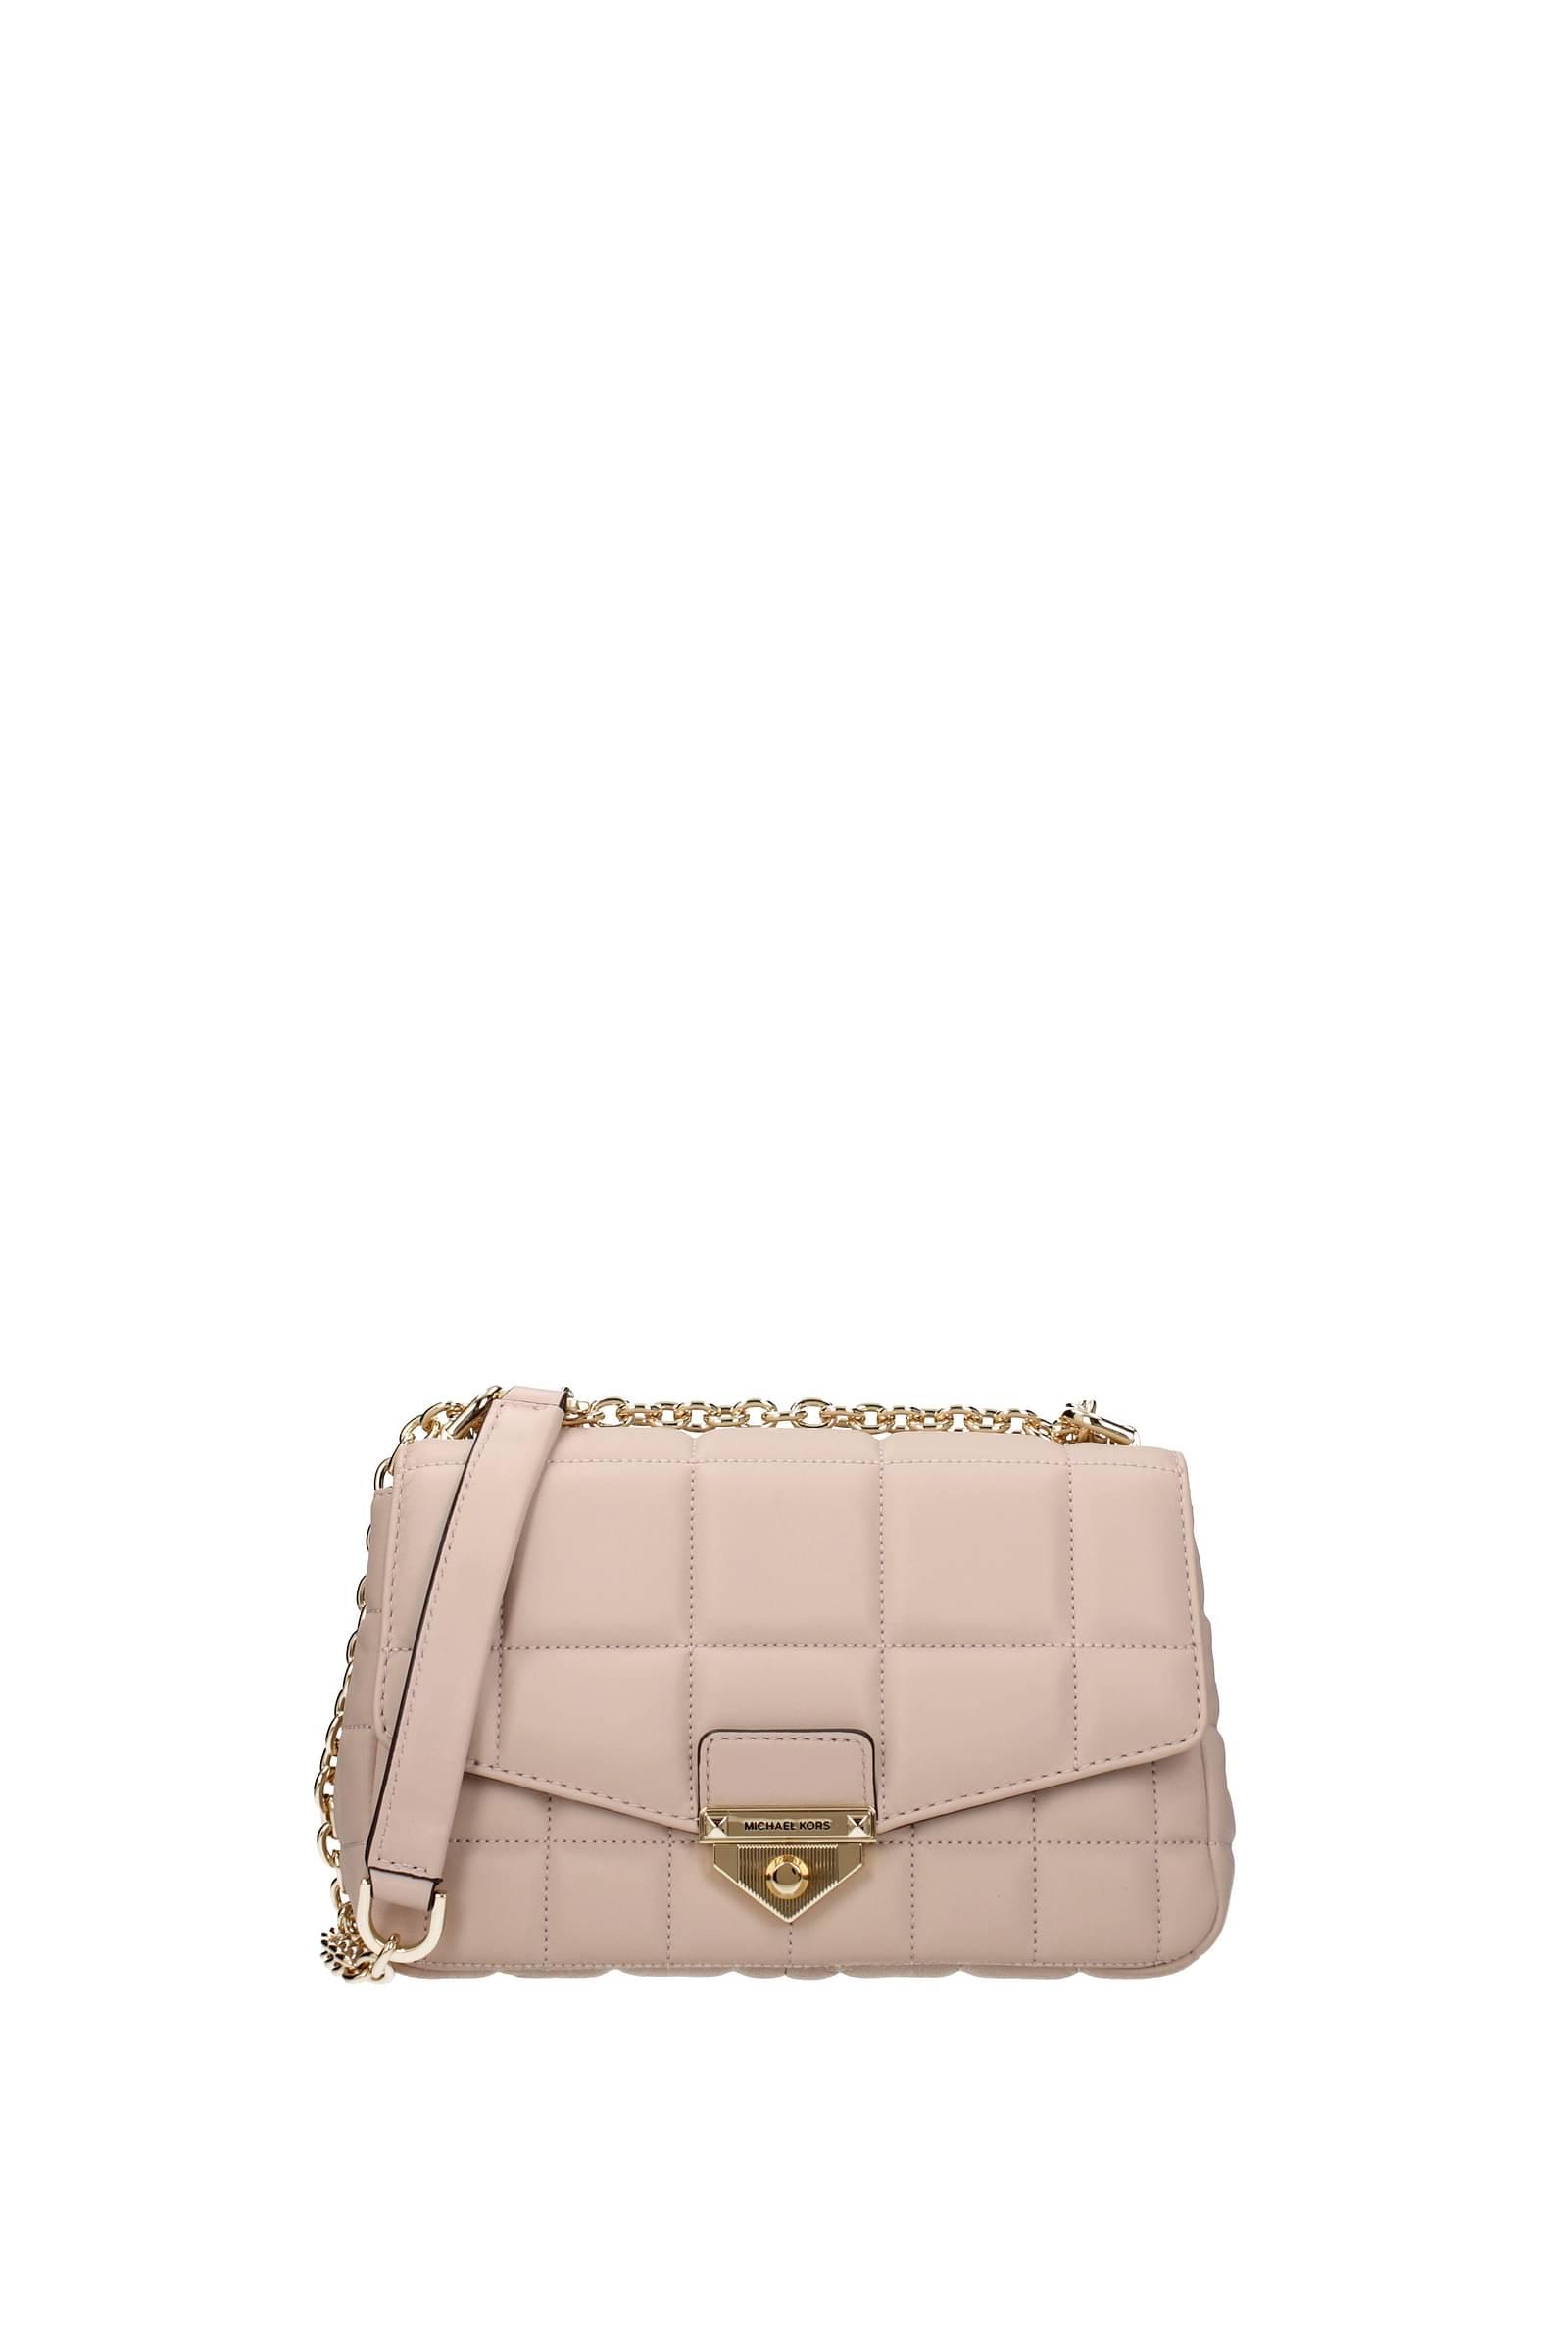 Michael Kors Mirella Small Hot Pink Leather Top Zip Shopper Tote Crossbody Bag